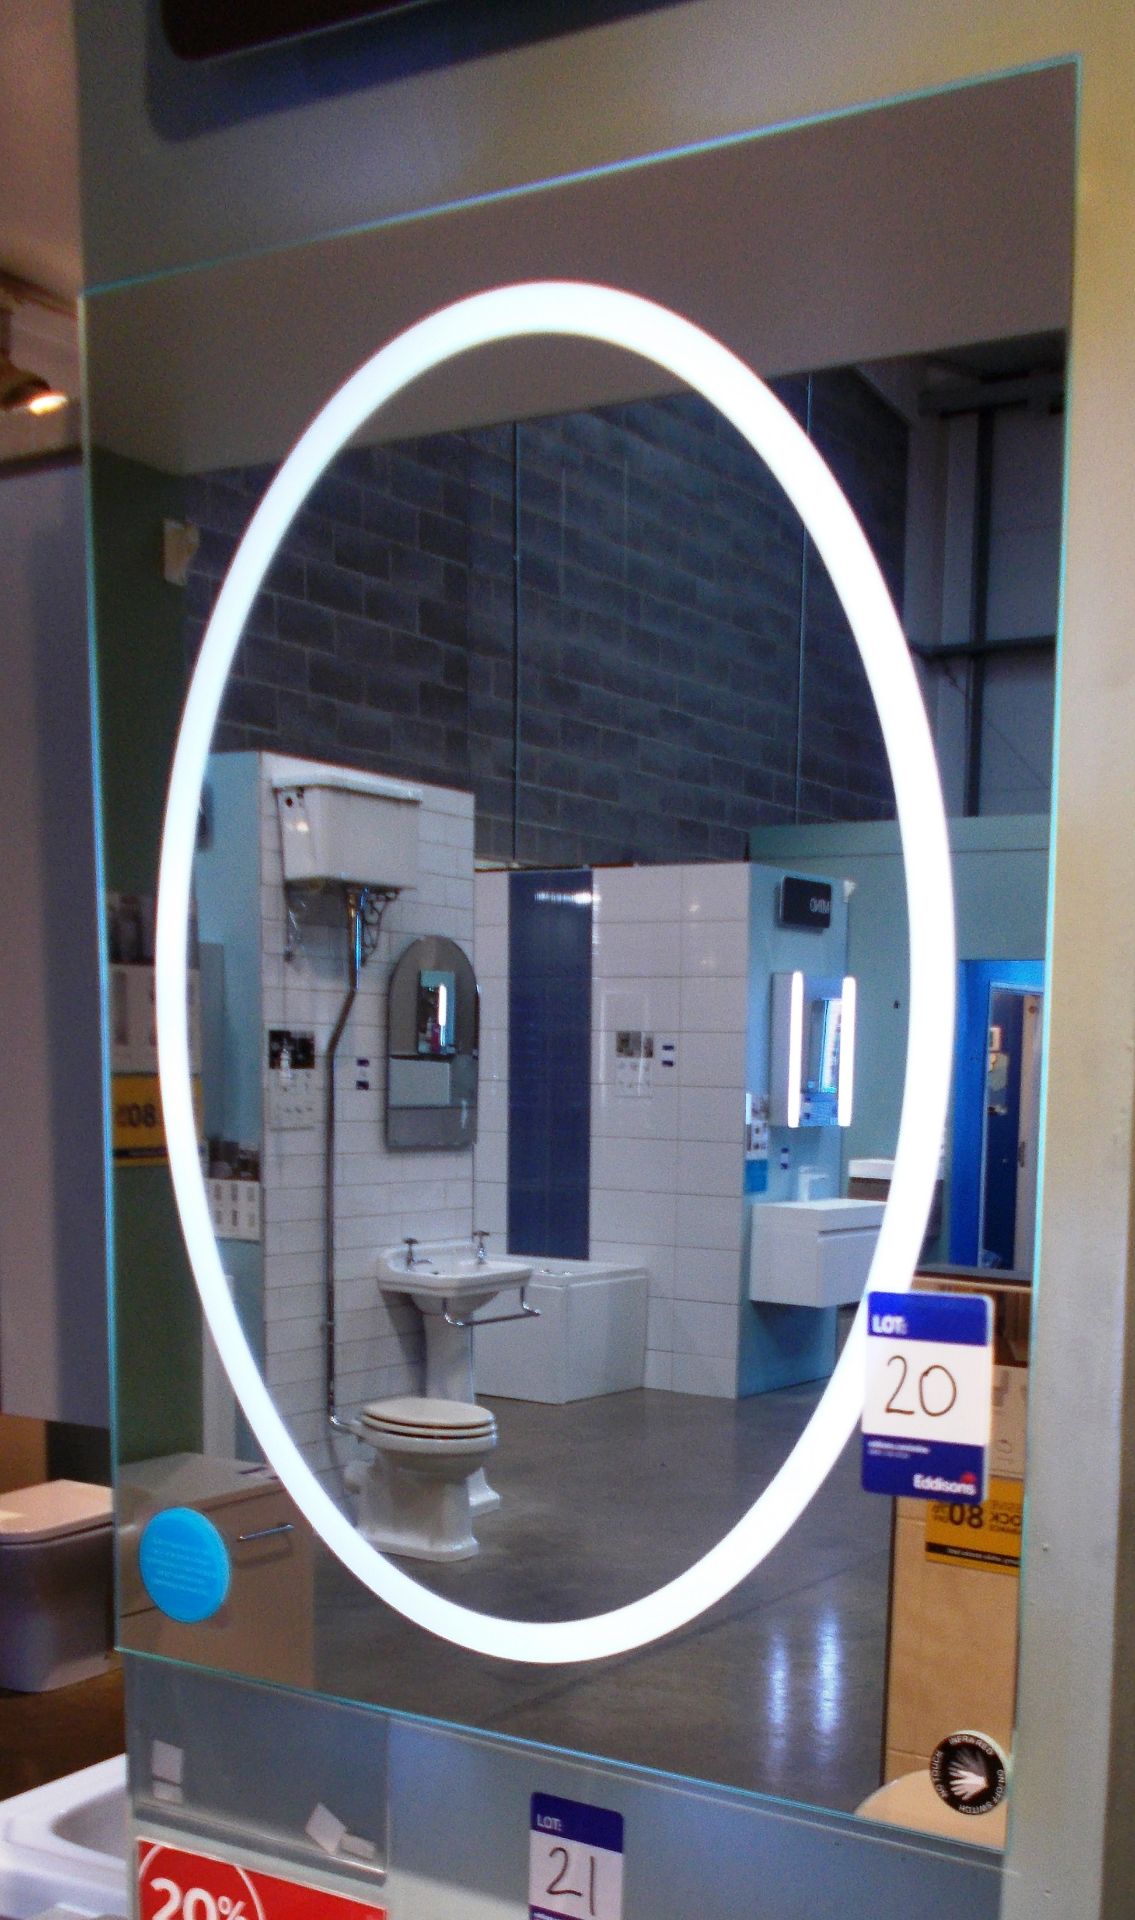 Atmos wall mounted illuminated mirror. RRP £199